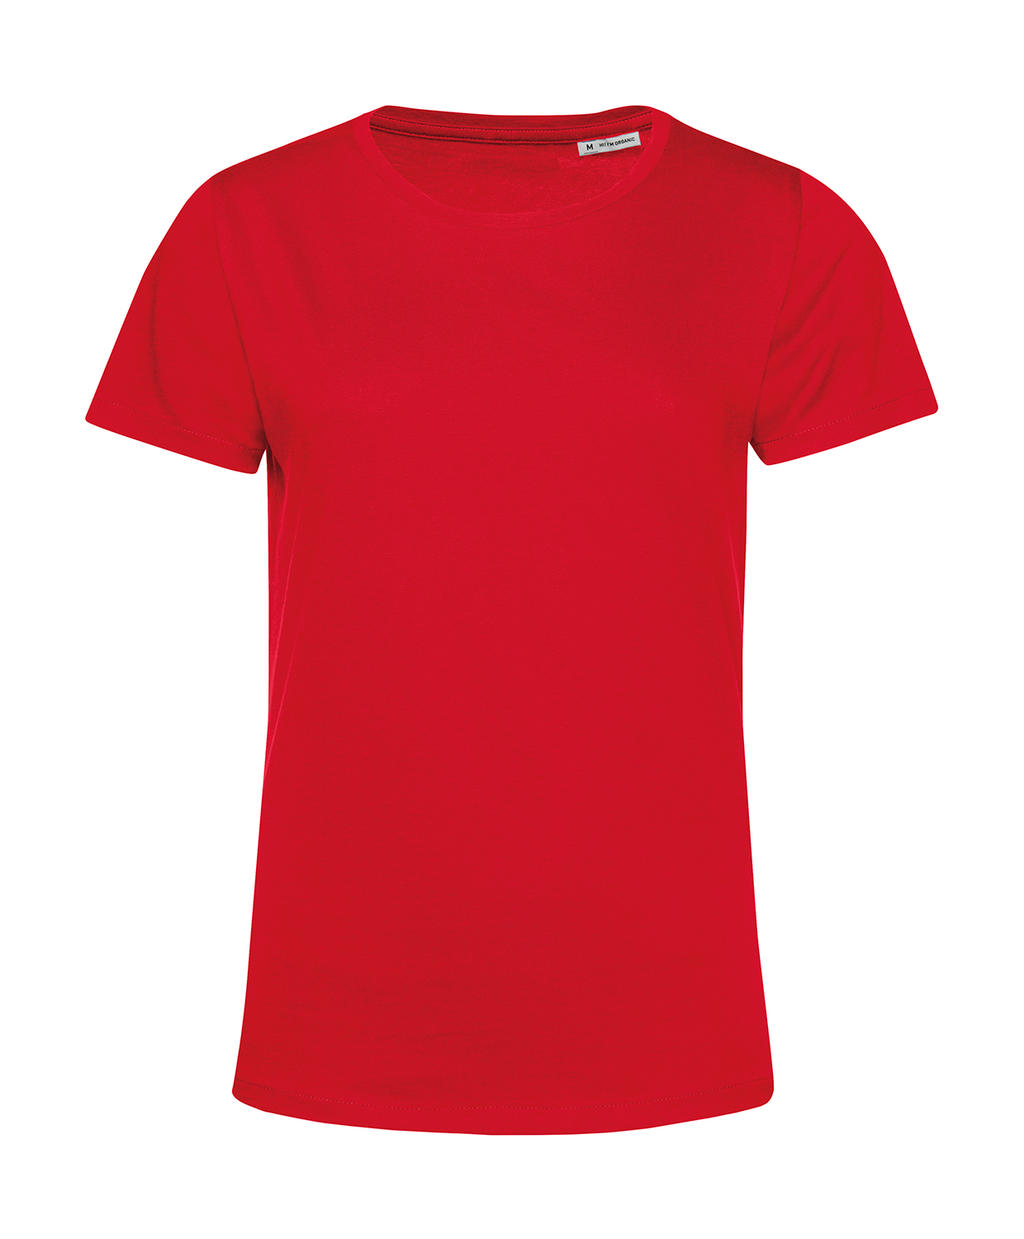 Tričko dámské BC Organic Inspire E150 - červené, S